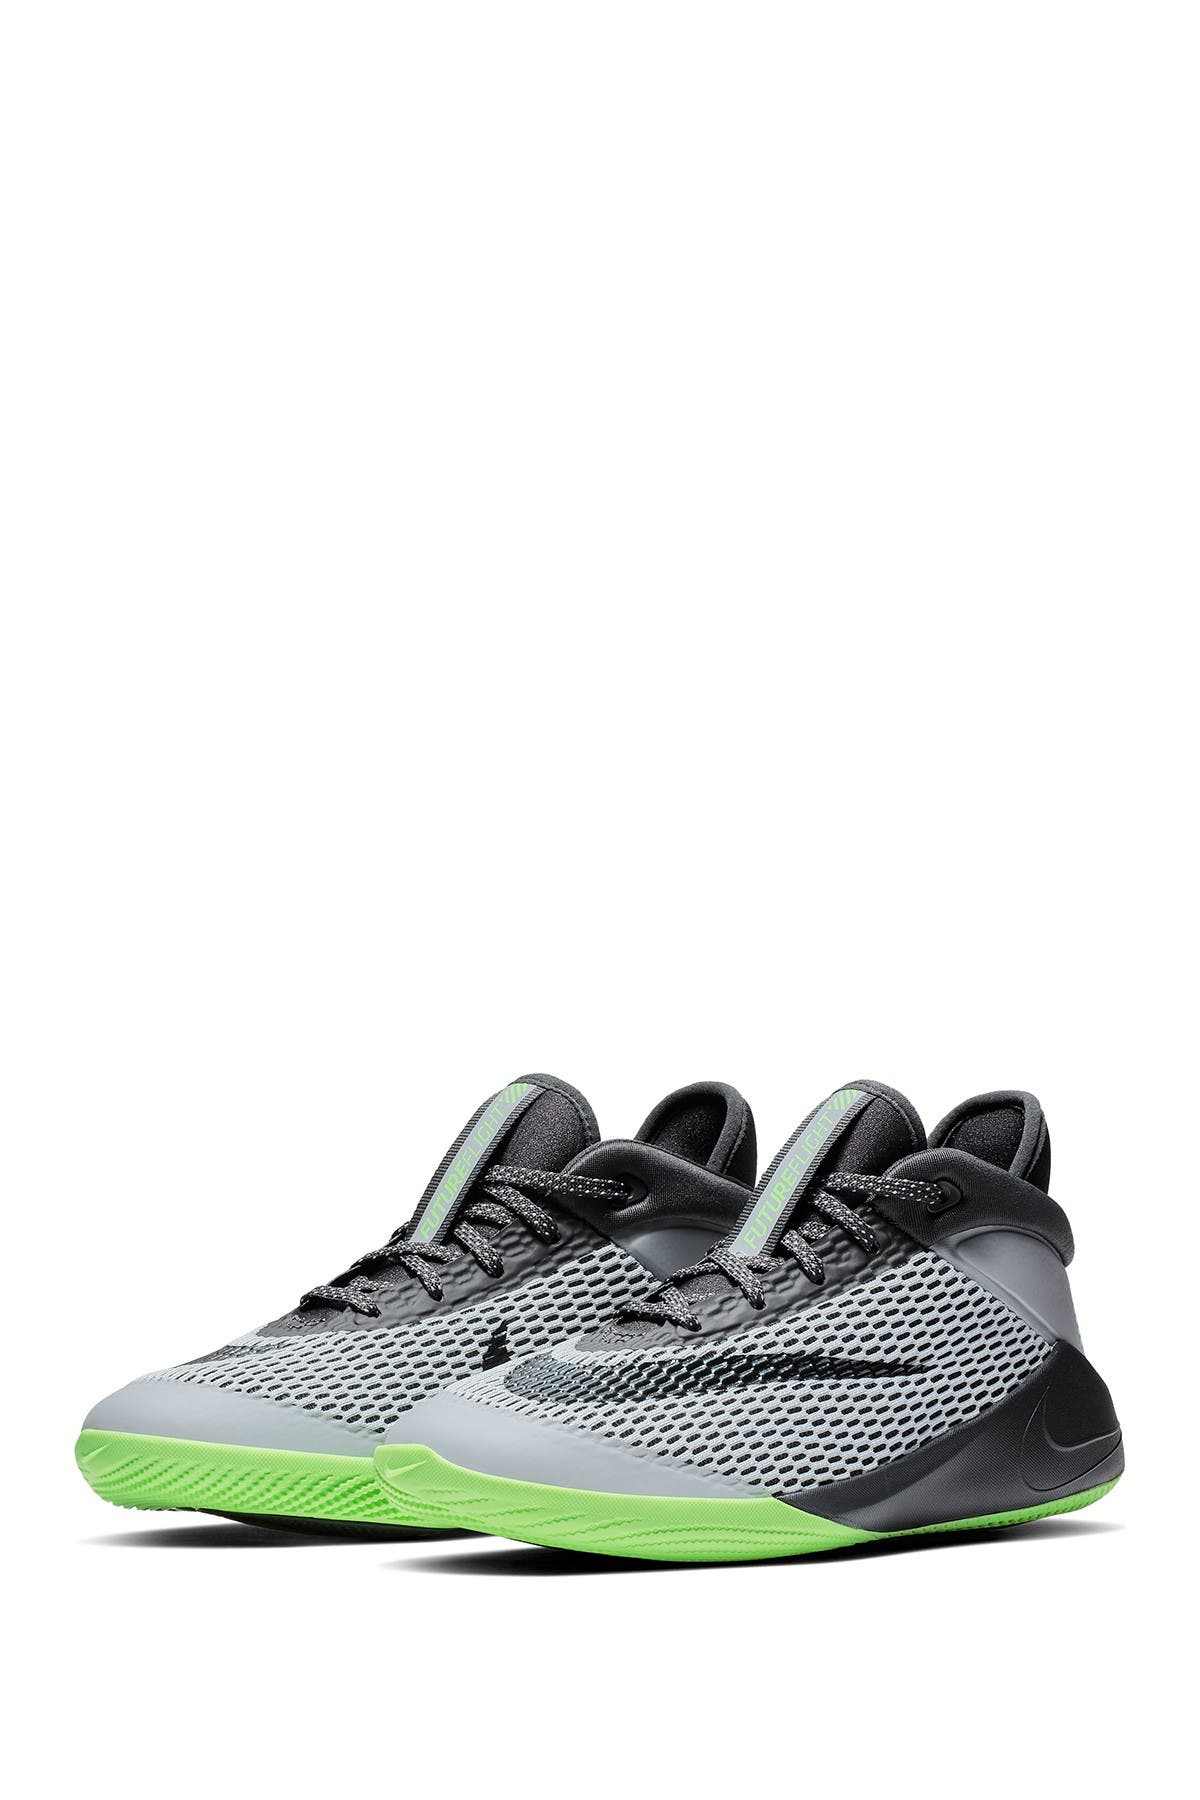 Nike | Future Flight Basketball Shoe 